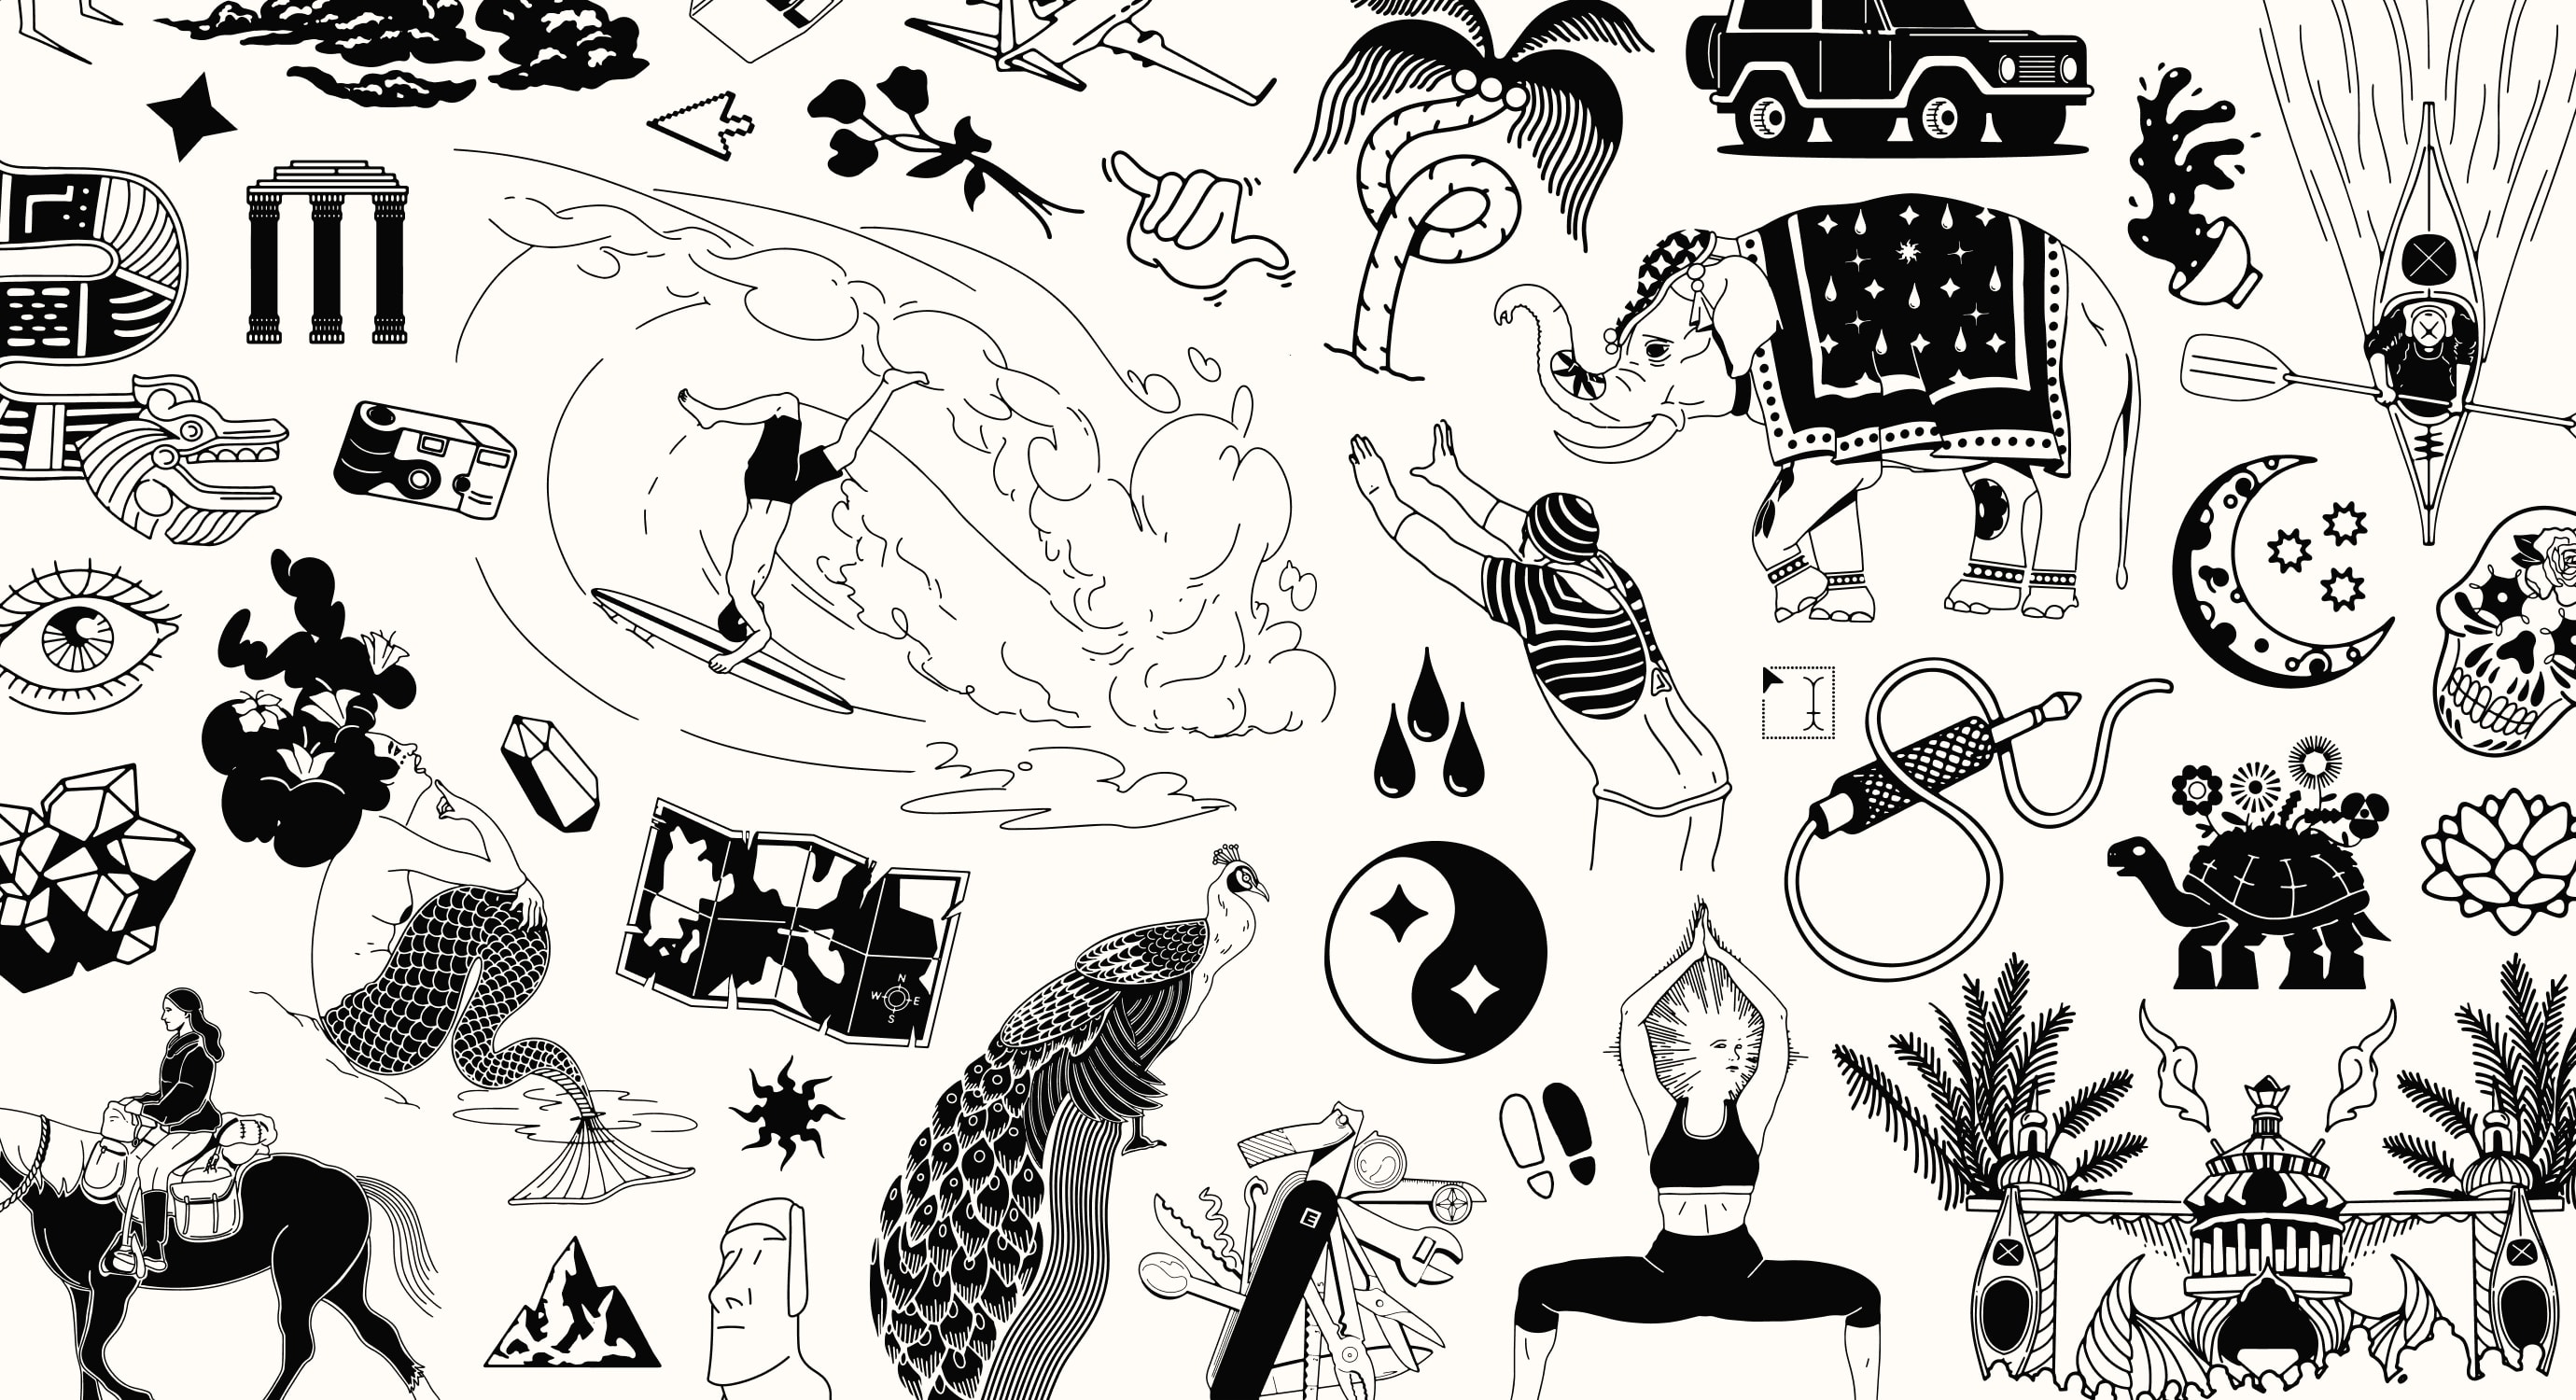 a collage of handmade illustrations, such as an elephant, aerialists, hawaiian style beach houses, etc.